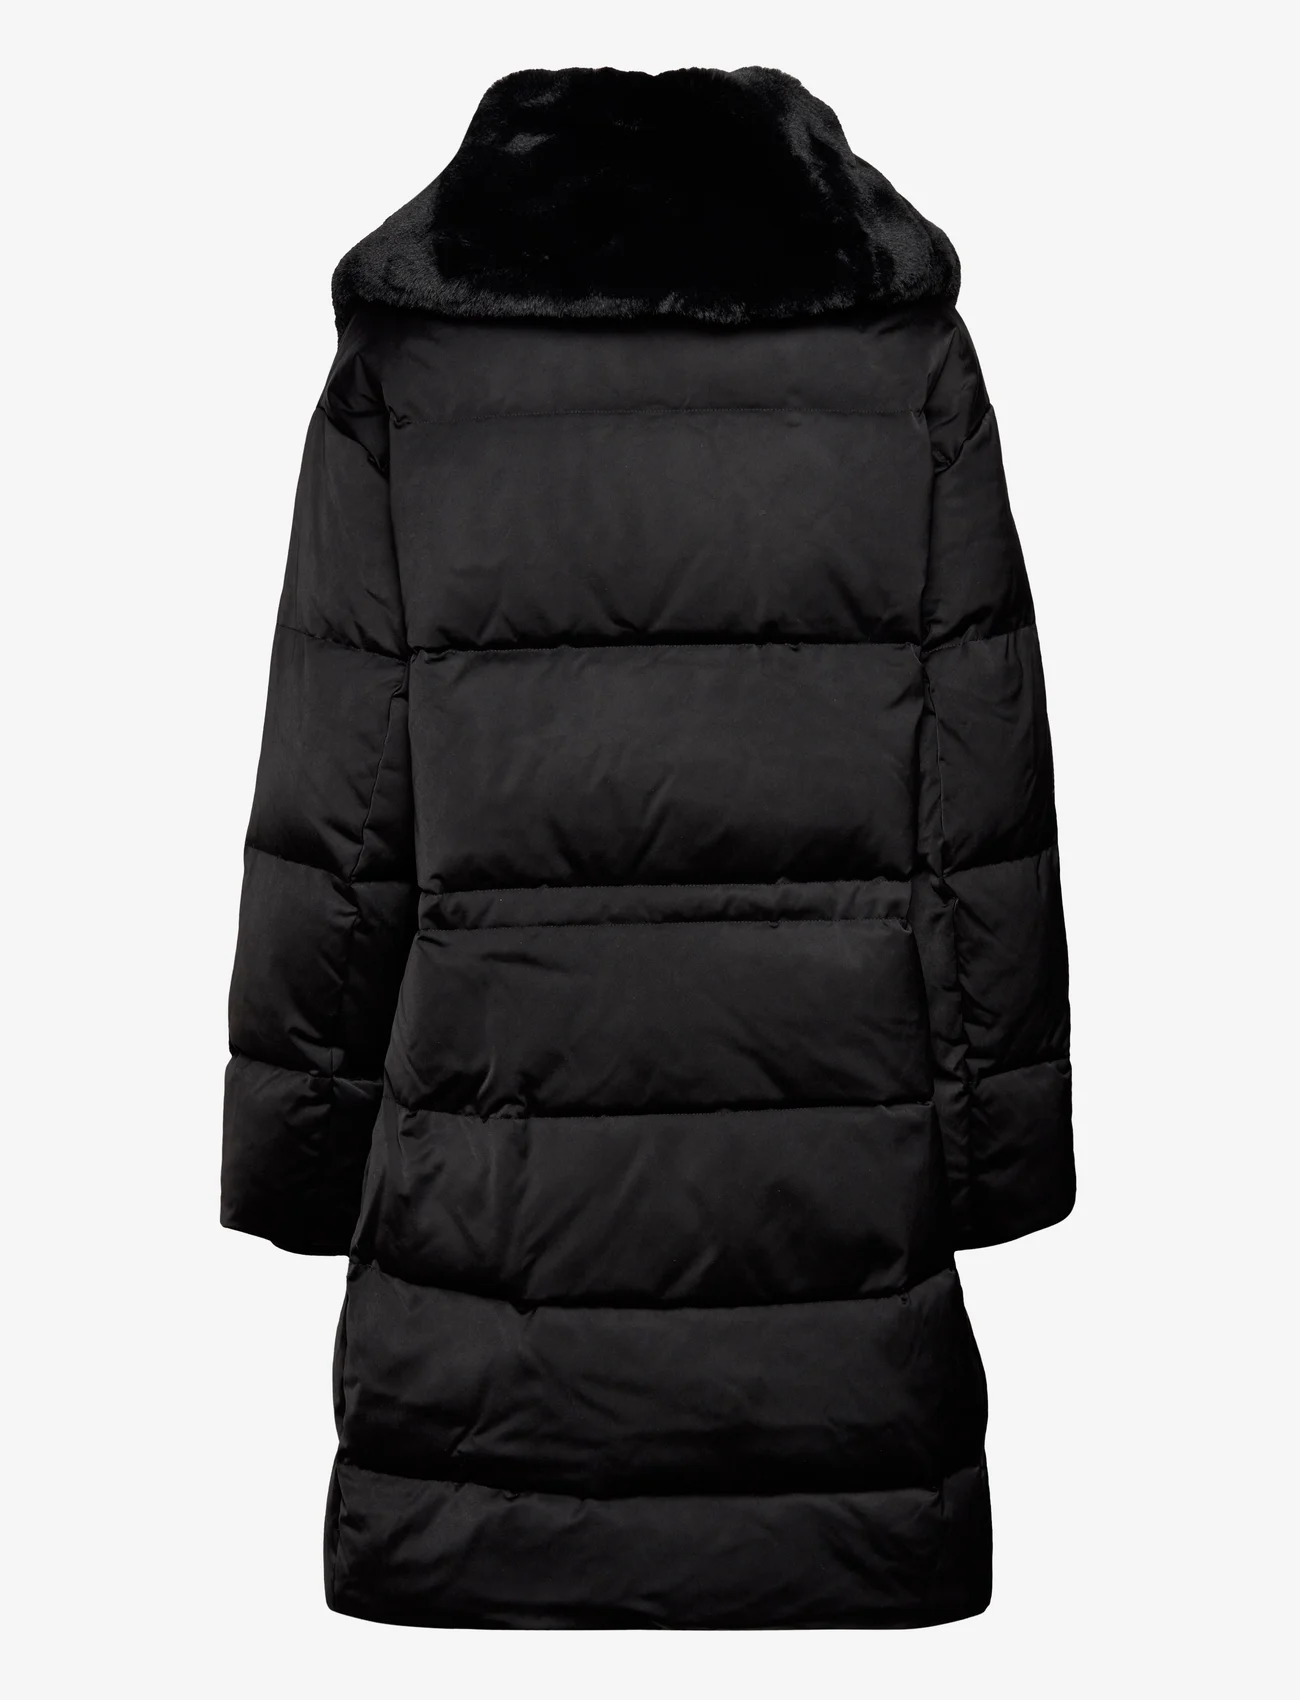 Calvin Klein - LUX SATIN PUFFER COAT - vinterjakker - ck black - 1